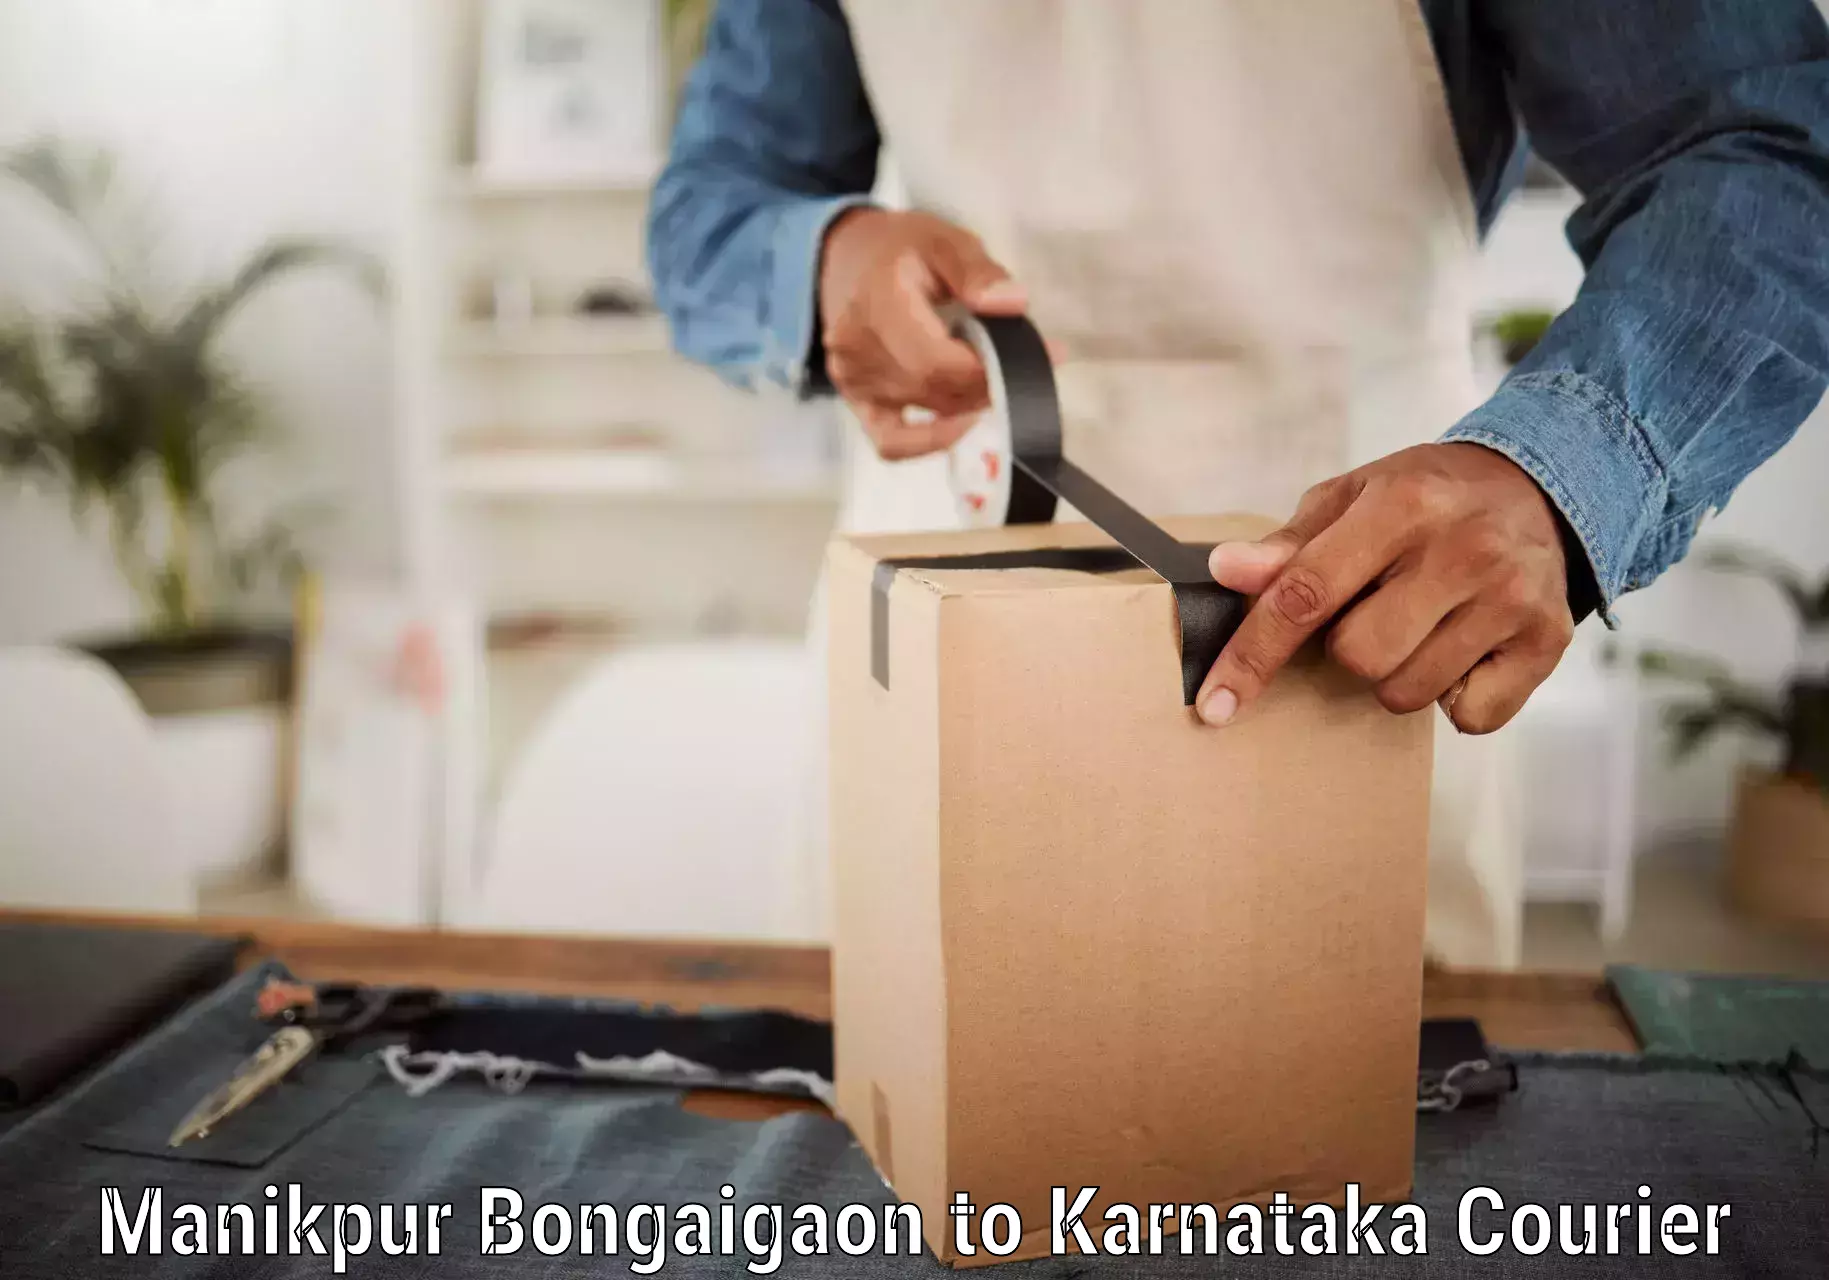 24-hour courier service Manikpur Bongaigaon to Mangalore